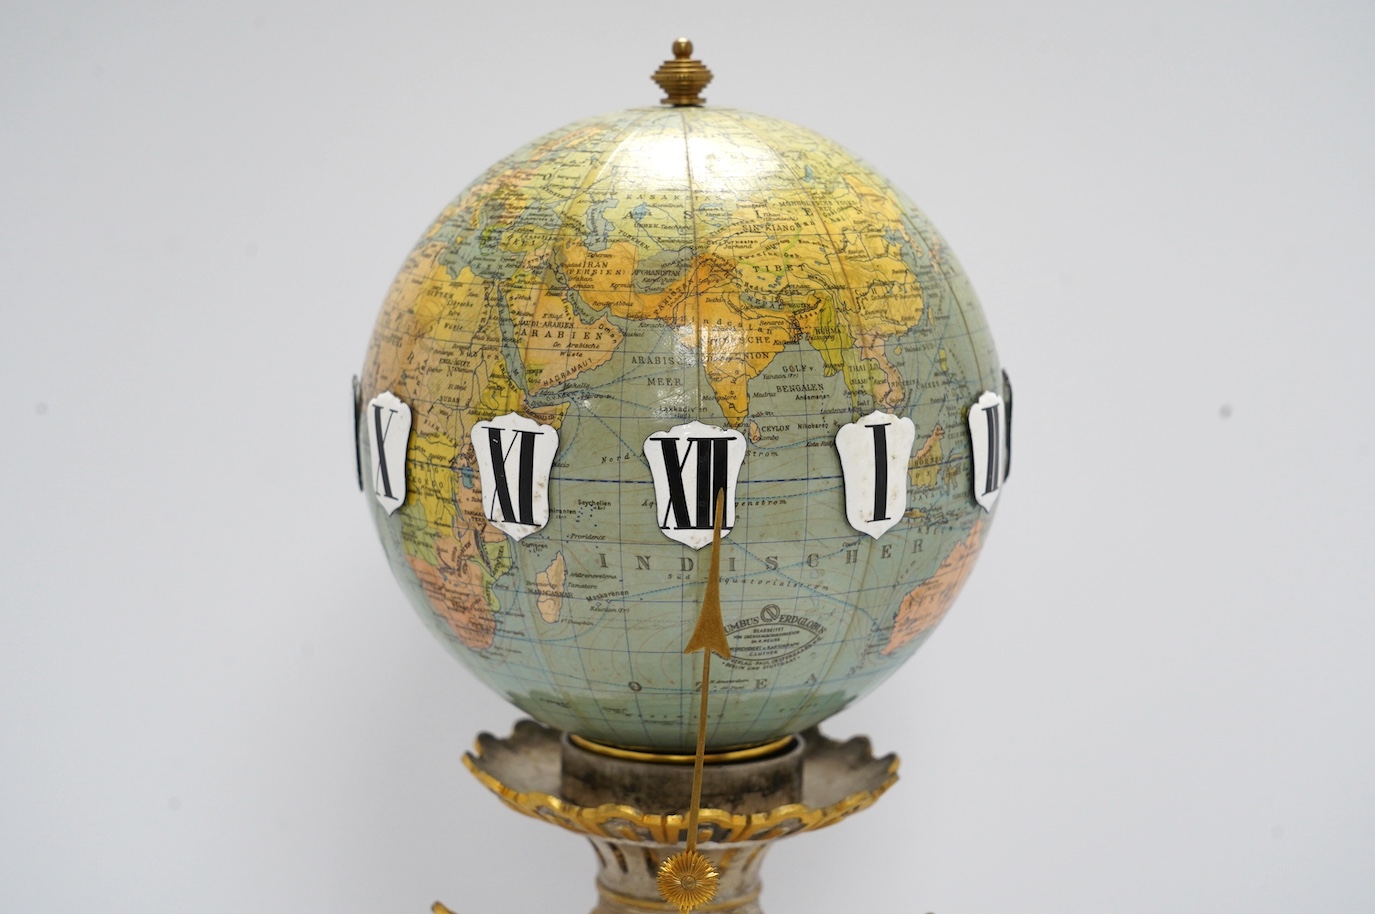 A late 19th century German Columbus Erdglobus globe timepiece, 49cm high. Condition - fair